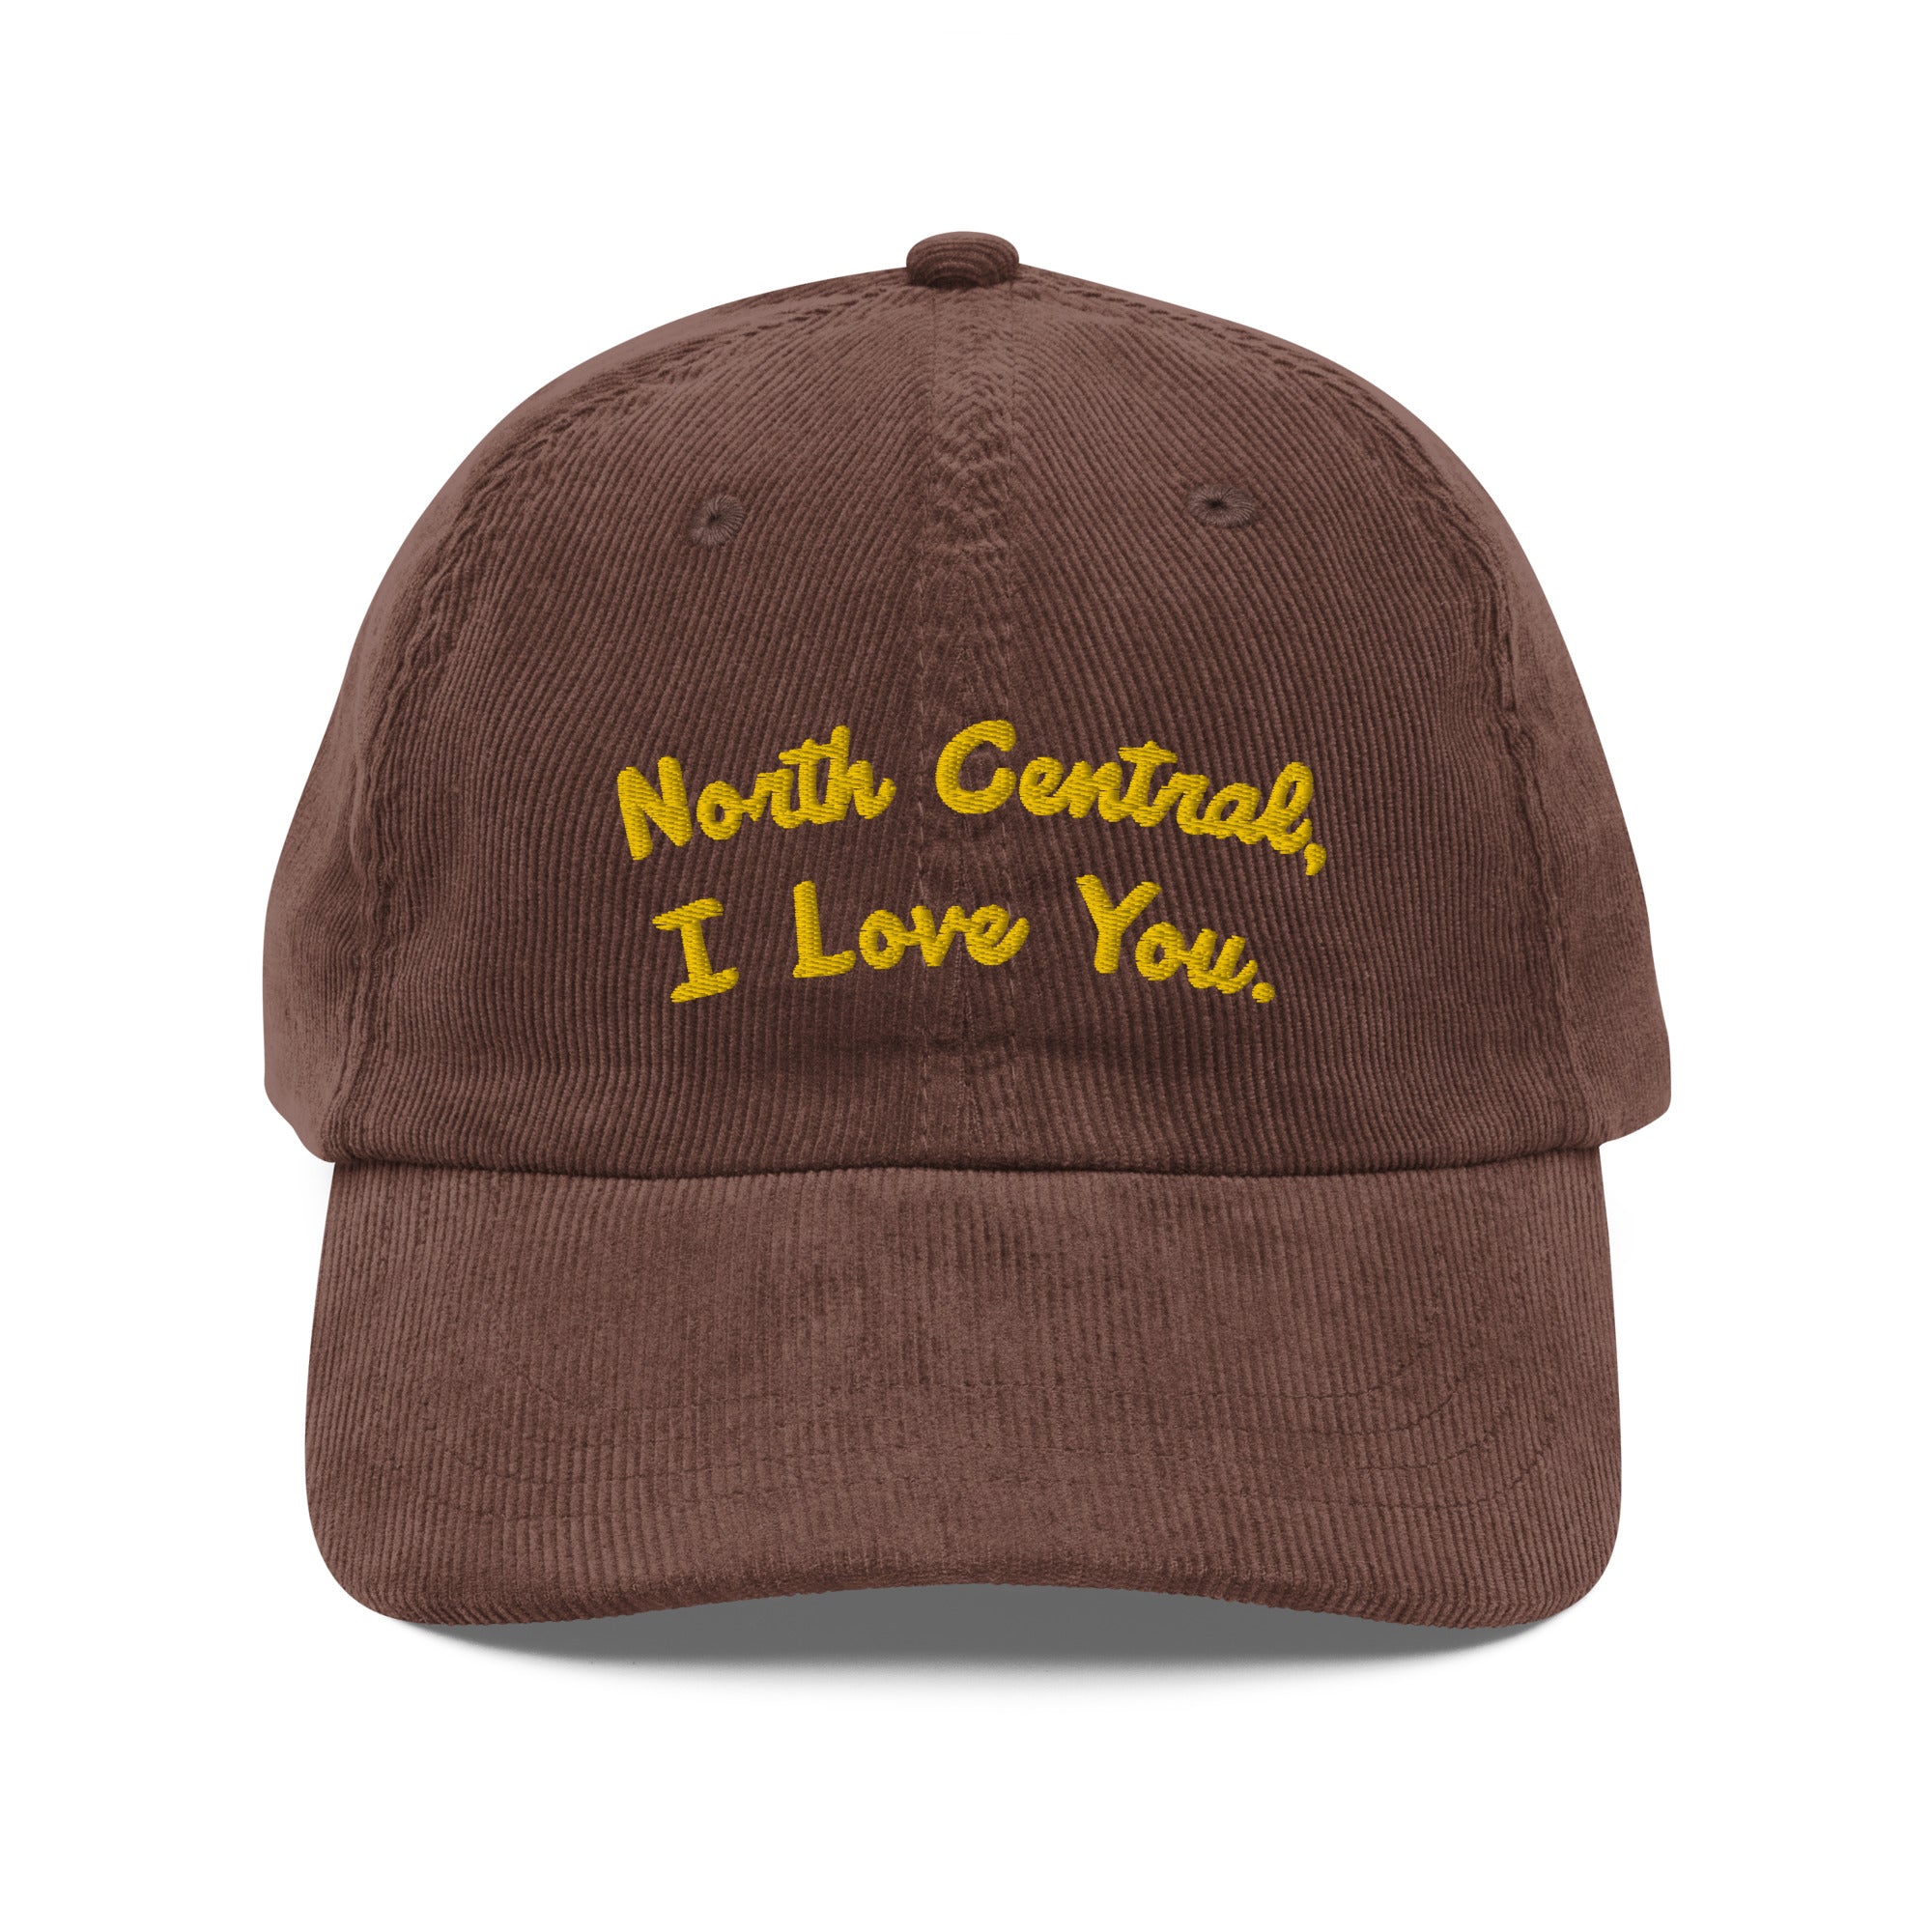 I Love You Corduroy Hat - North Central | Phoenix, AZ